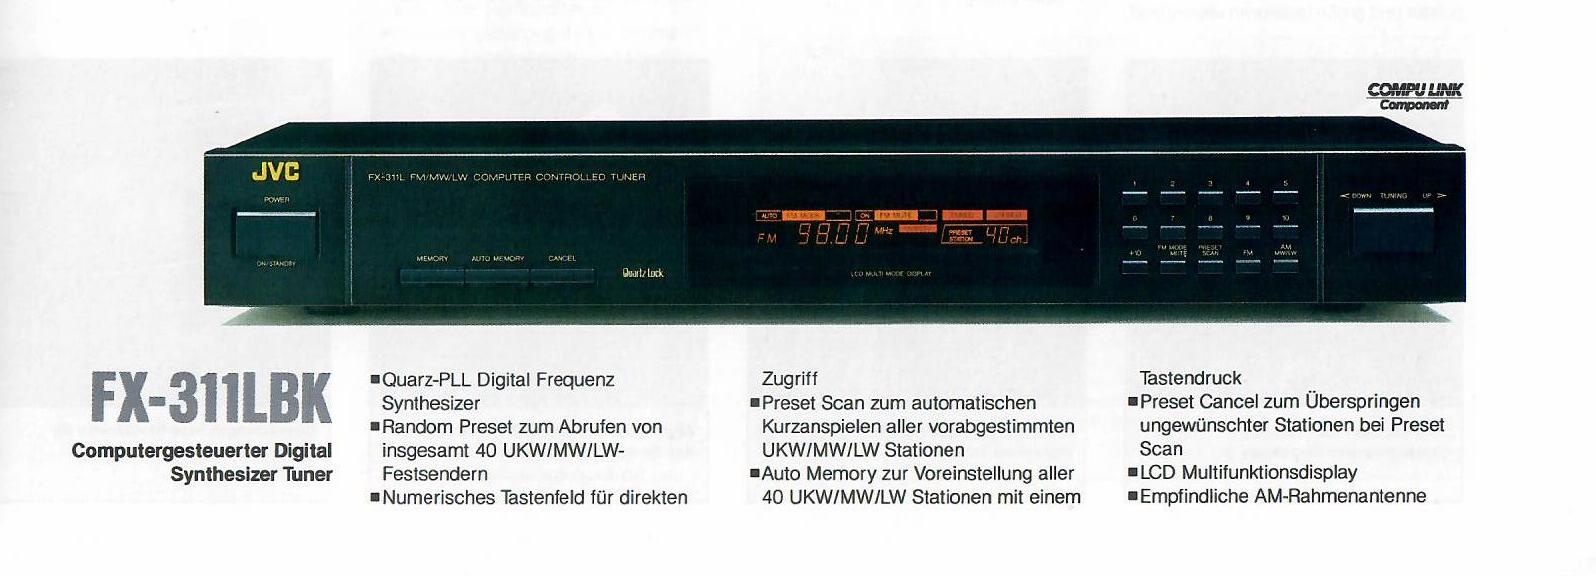 JVC FX-311 LBK-Prospekt-1989.jpg